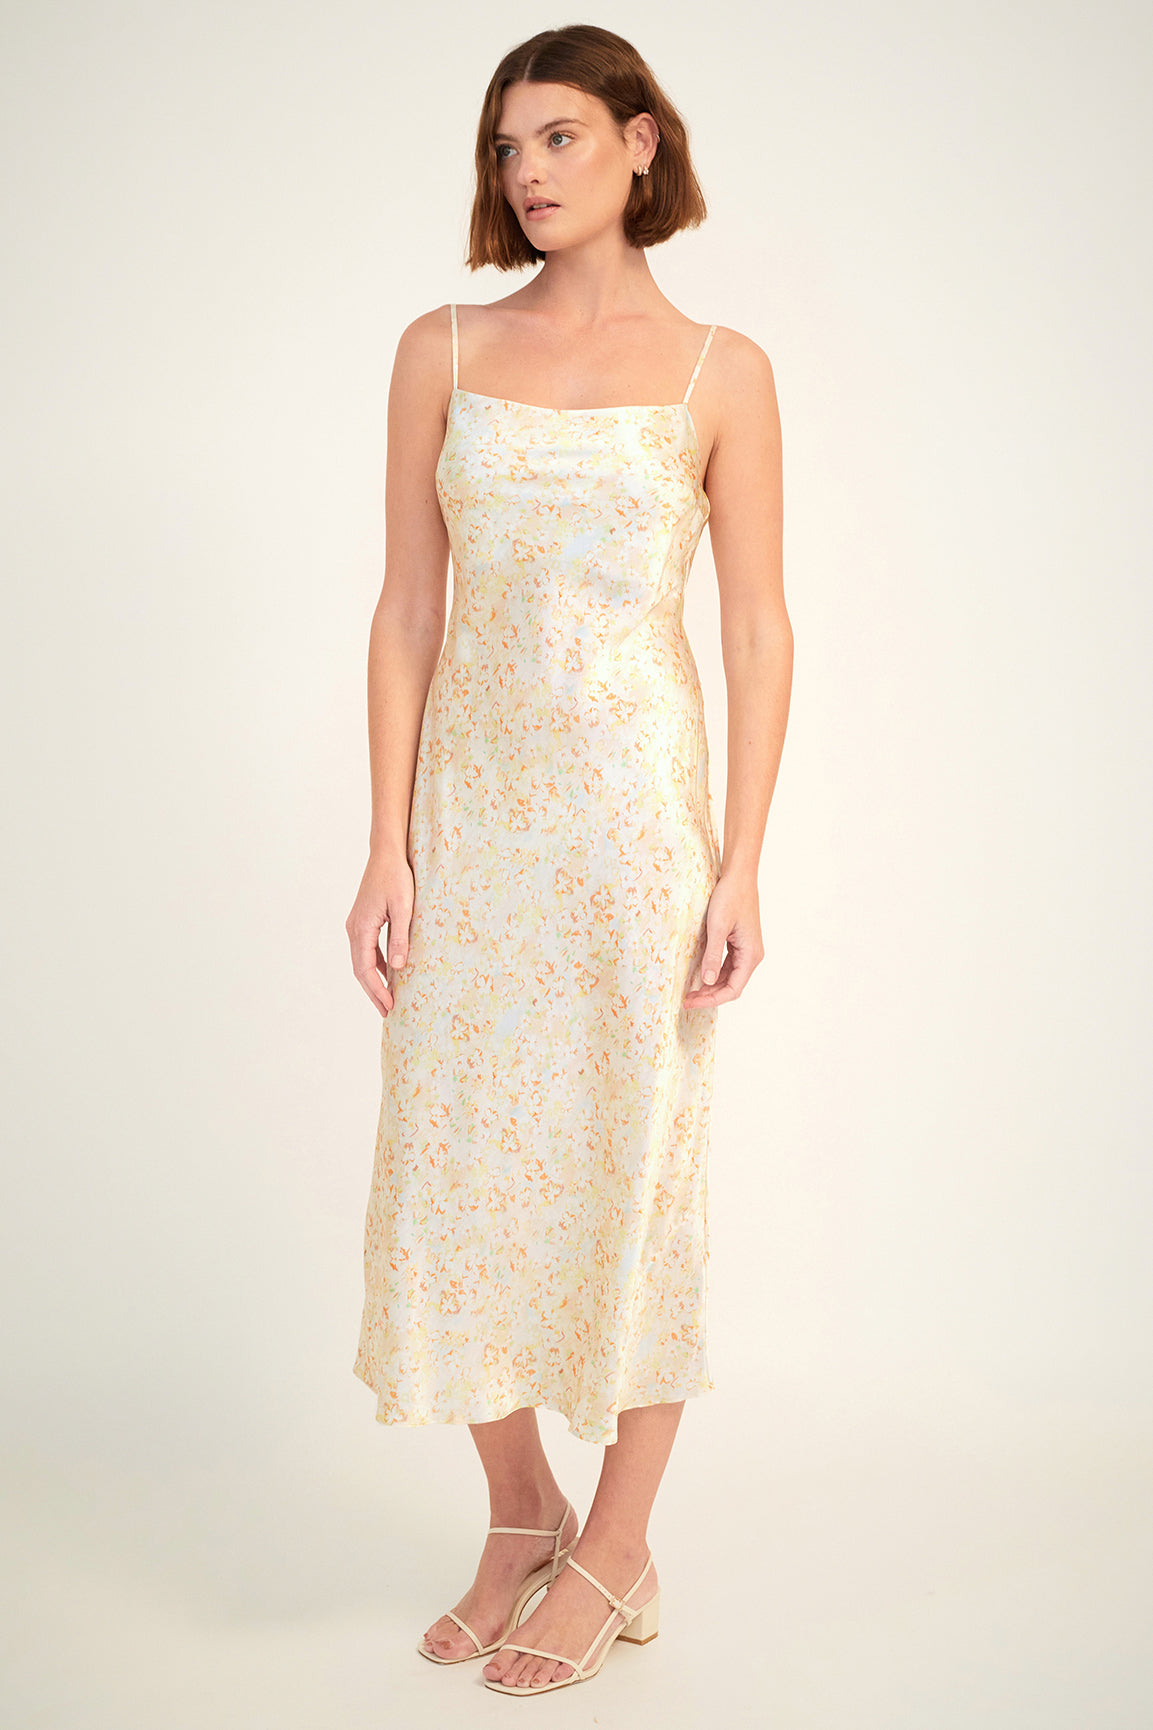 GINIA Blaire Silk Slip Dress in Westringa Floral Print